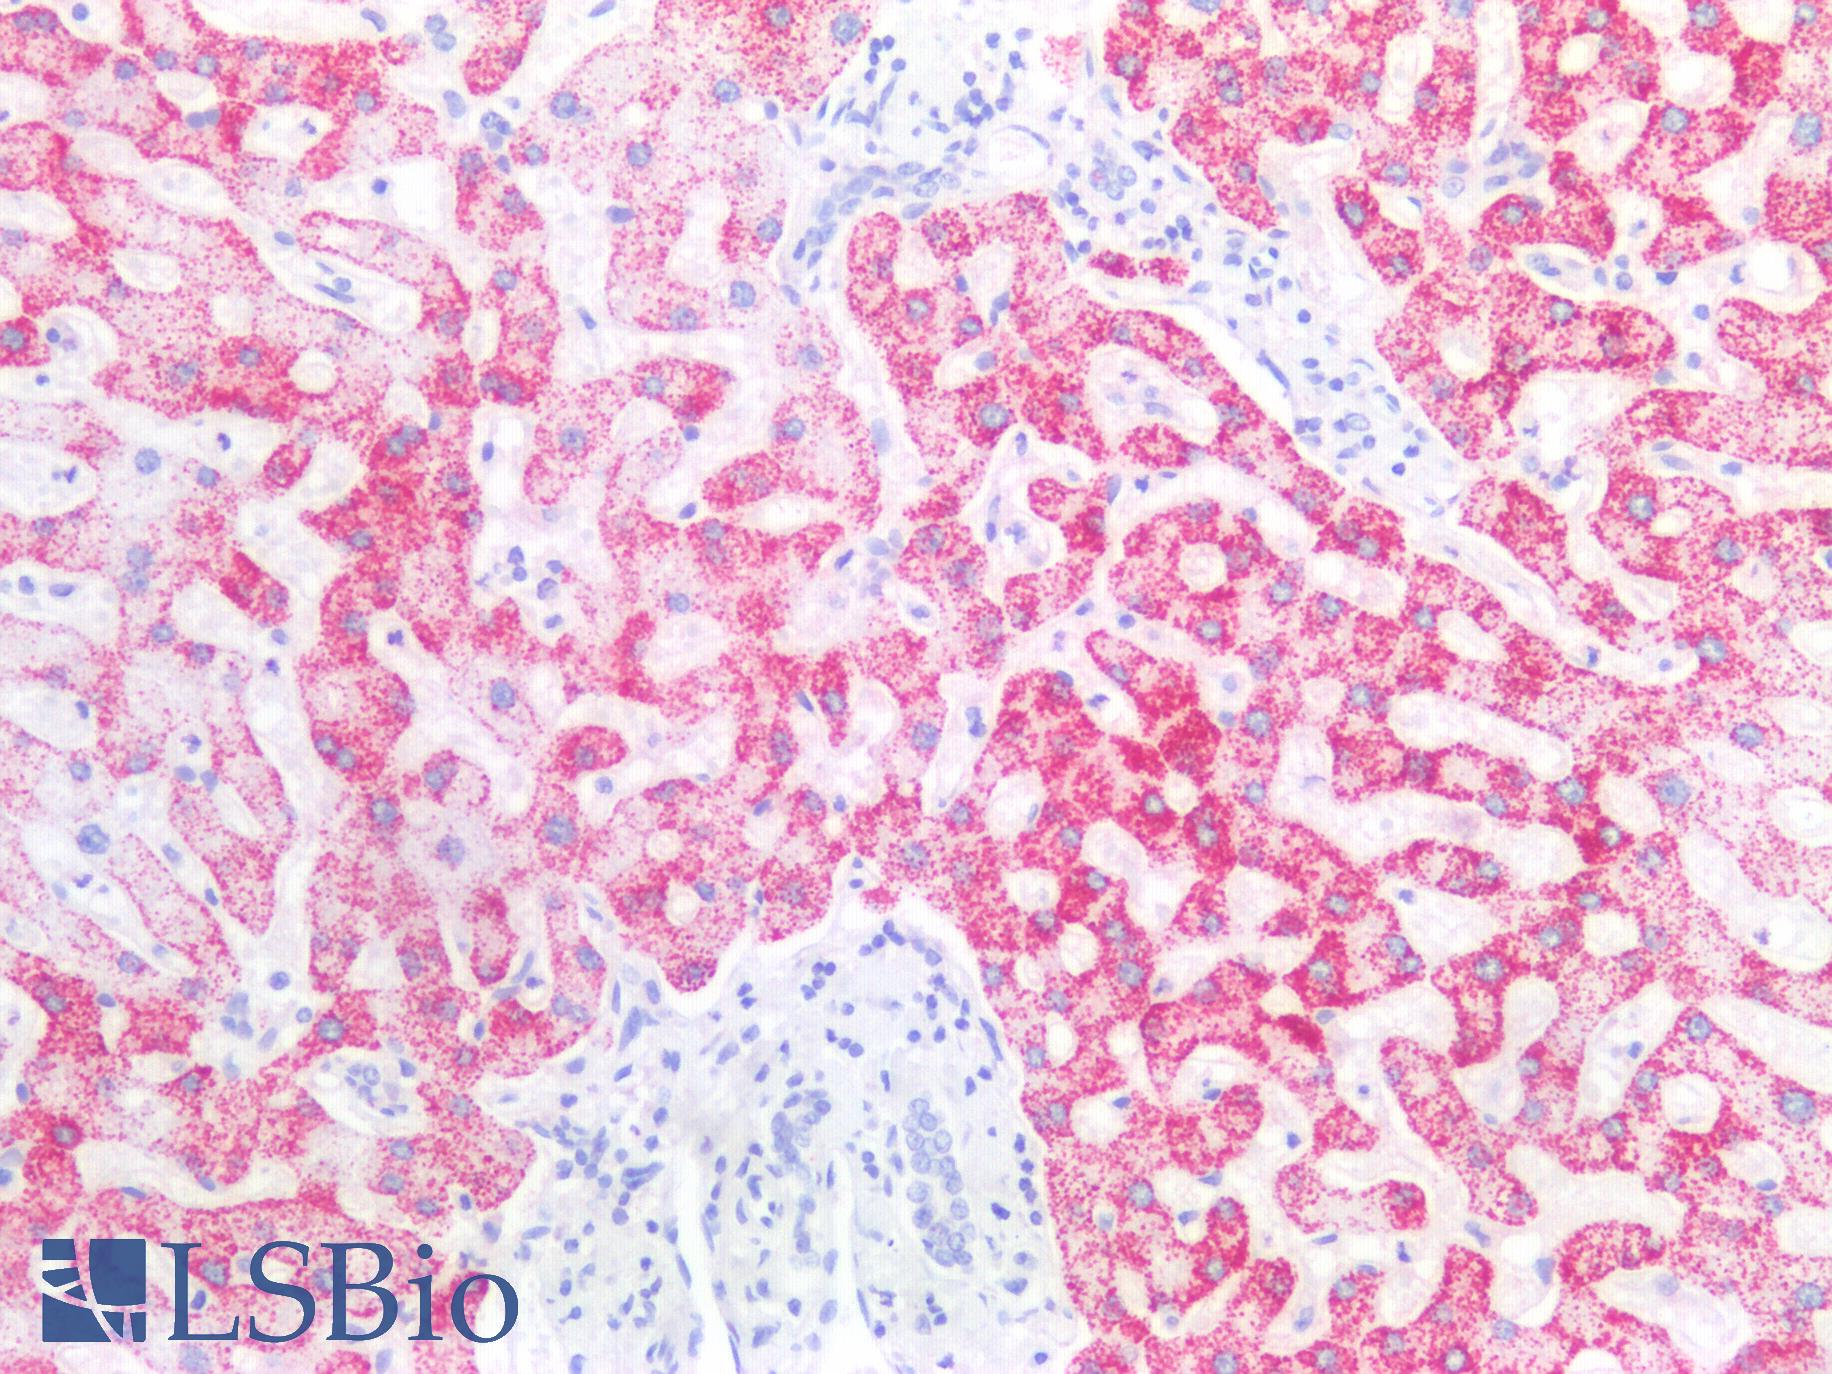 Hepatocyte Specific Antigen Antibody - Human Liver: Formalin-Fixed, Paraffin-Embedded (FFPE)